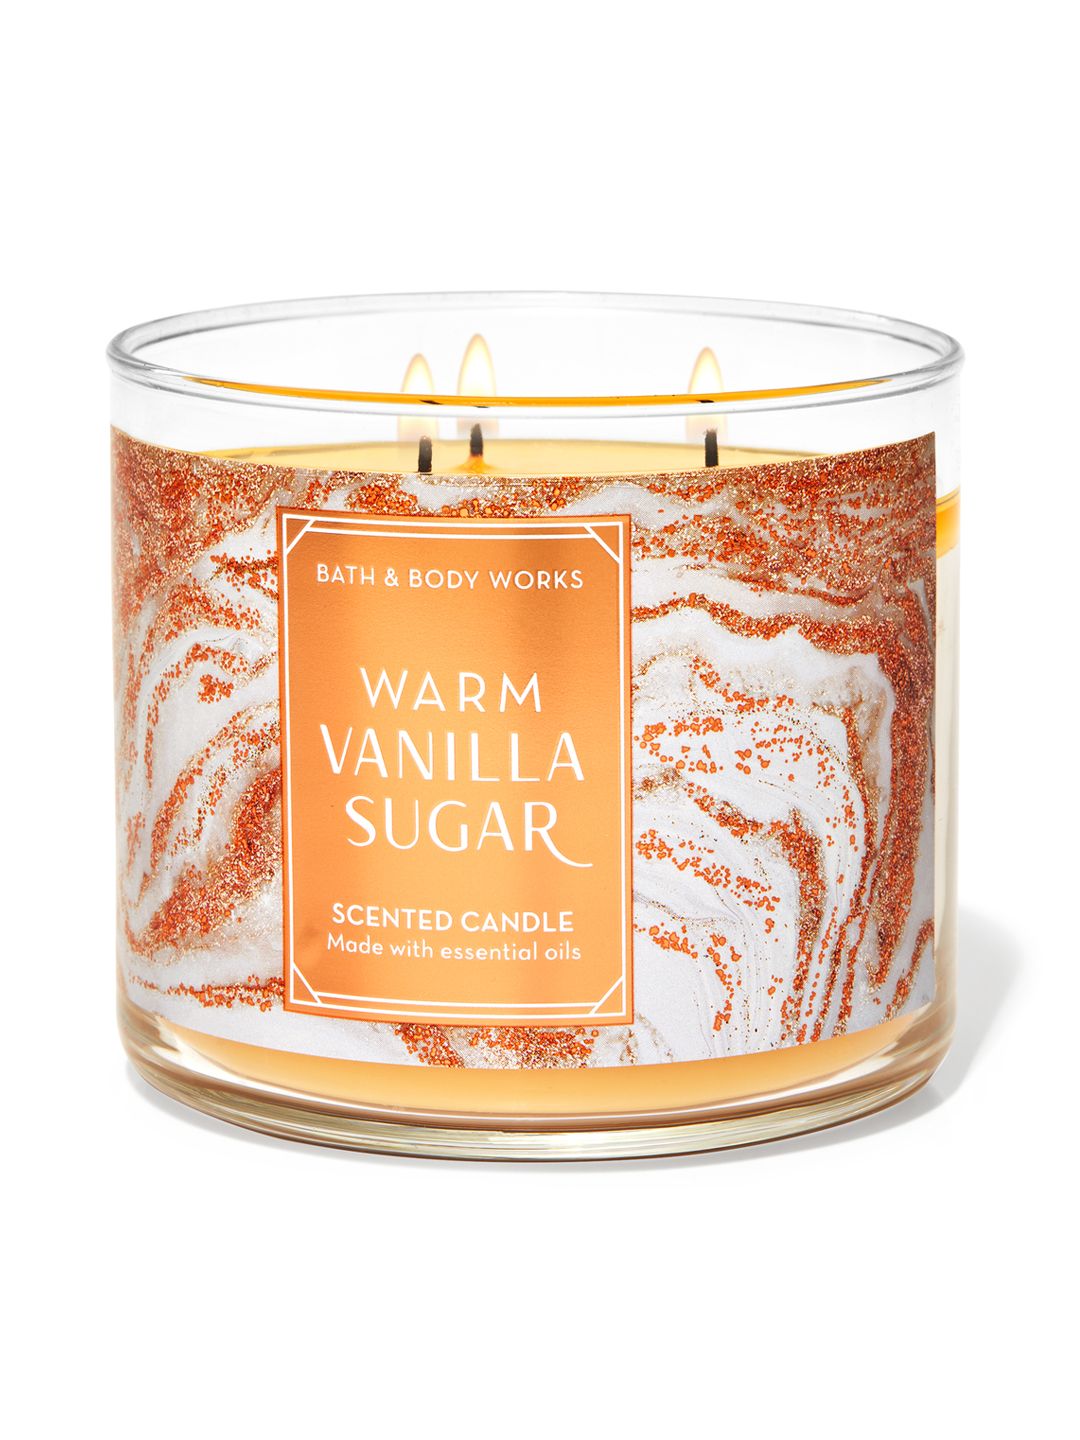 Bath & Body Works Warm Vanilla Sugar 3-Wick Candle Price in India